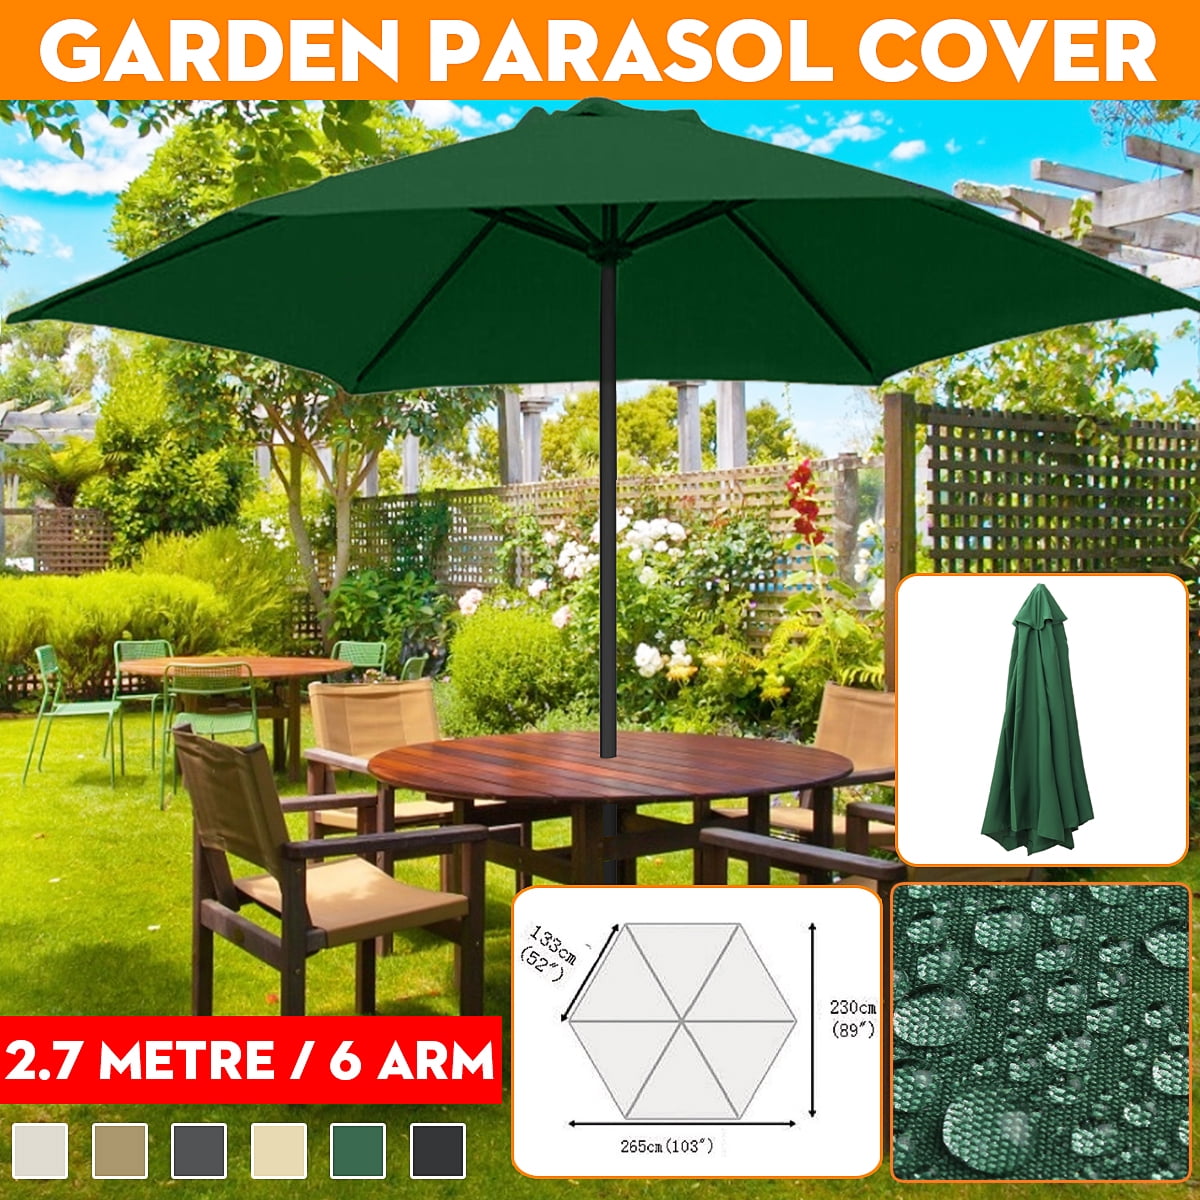 Waterproof Durable Outdoor Supplies Parasol Cover Garden Patio Umbrella Cover 